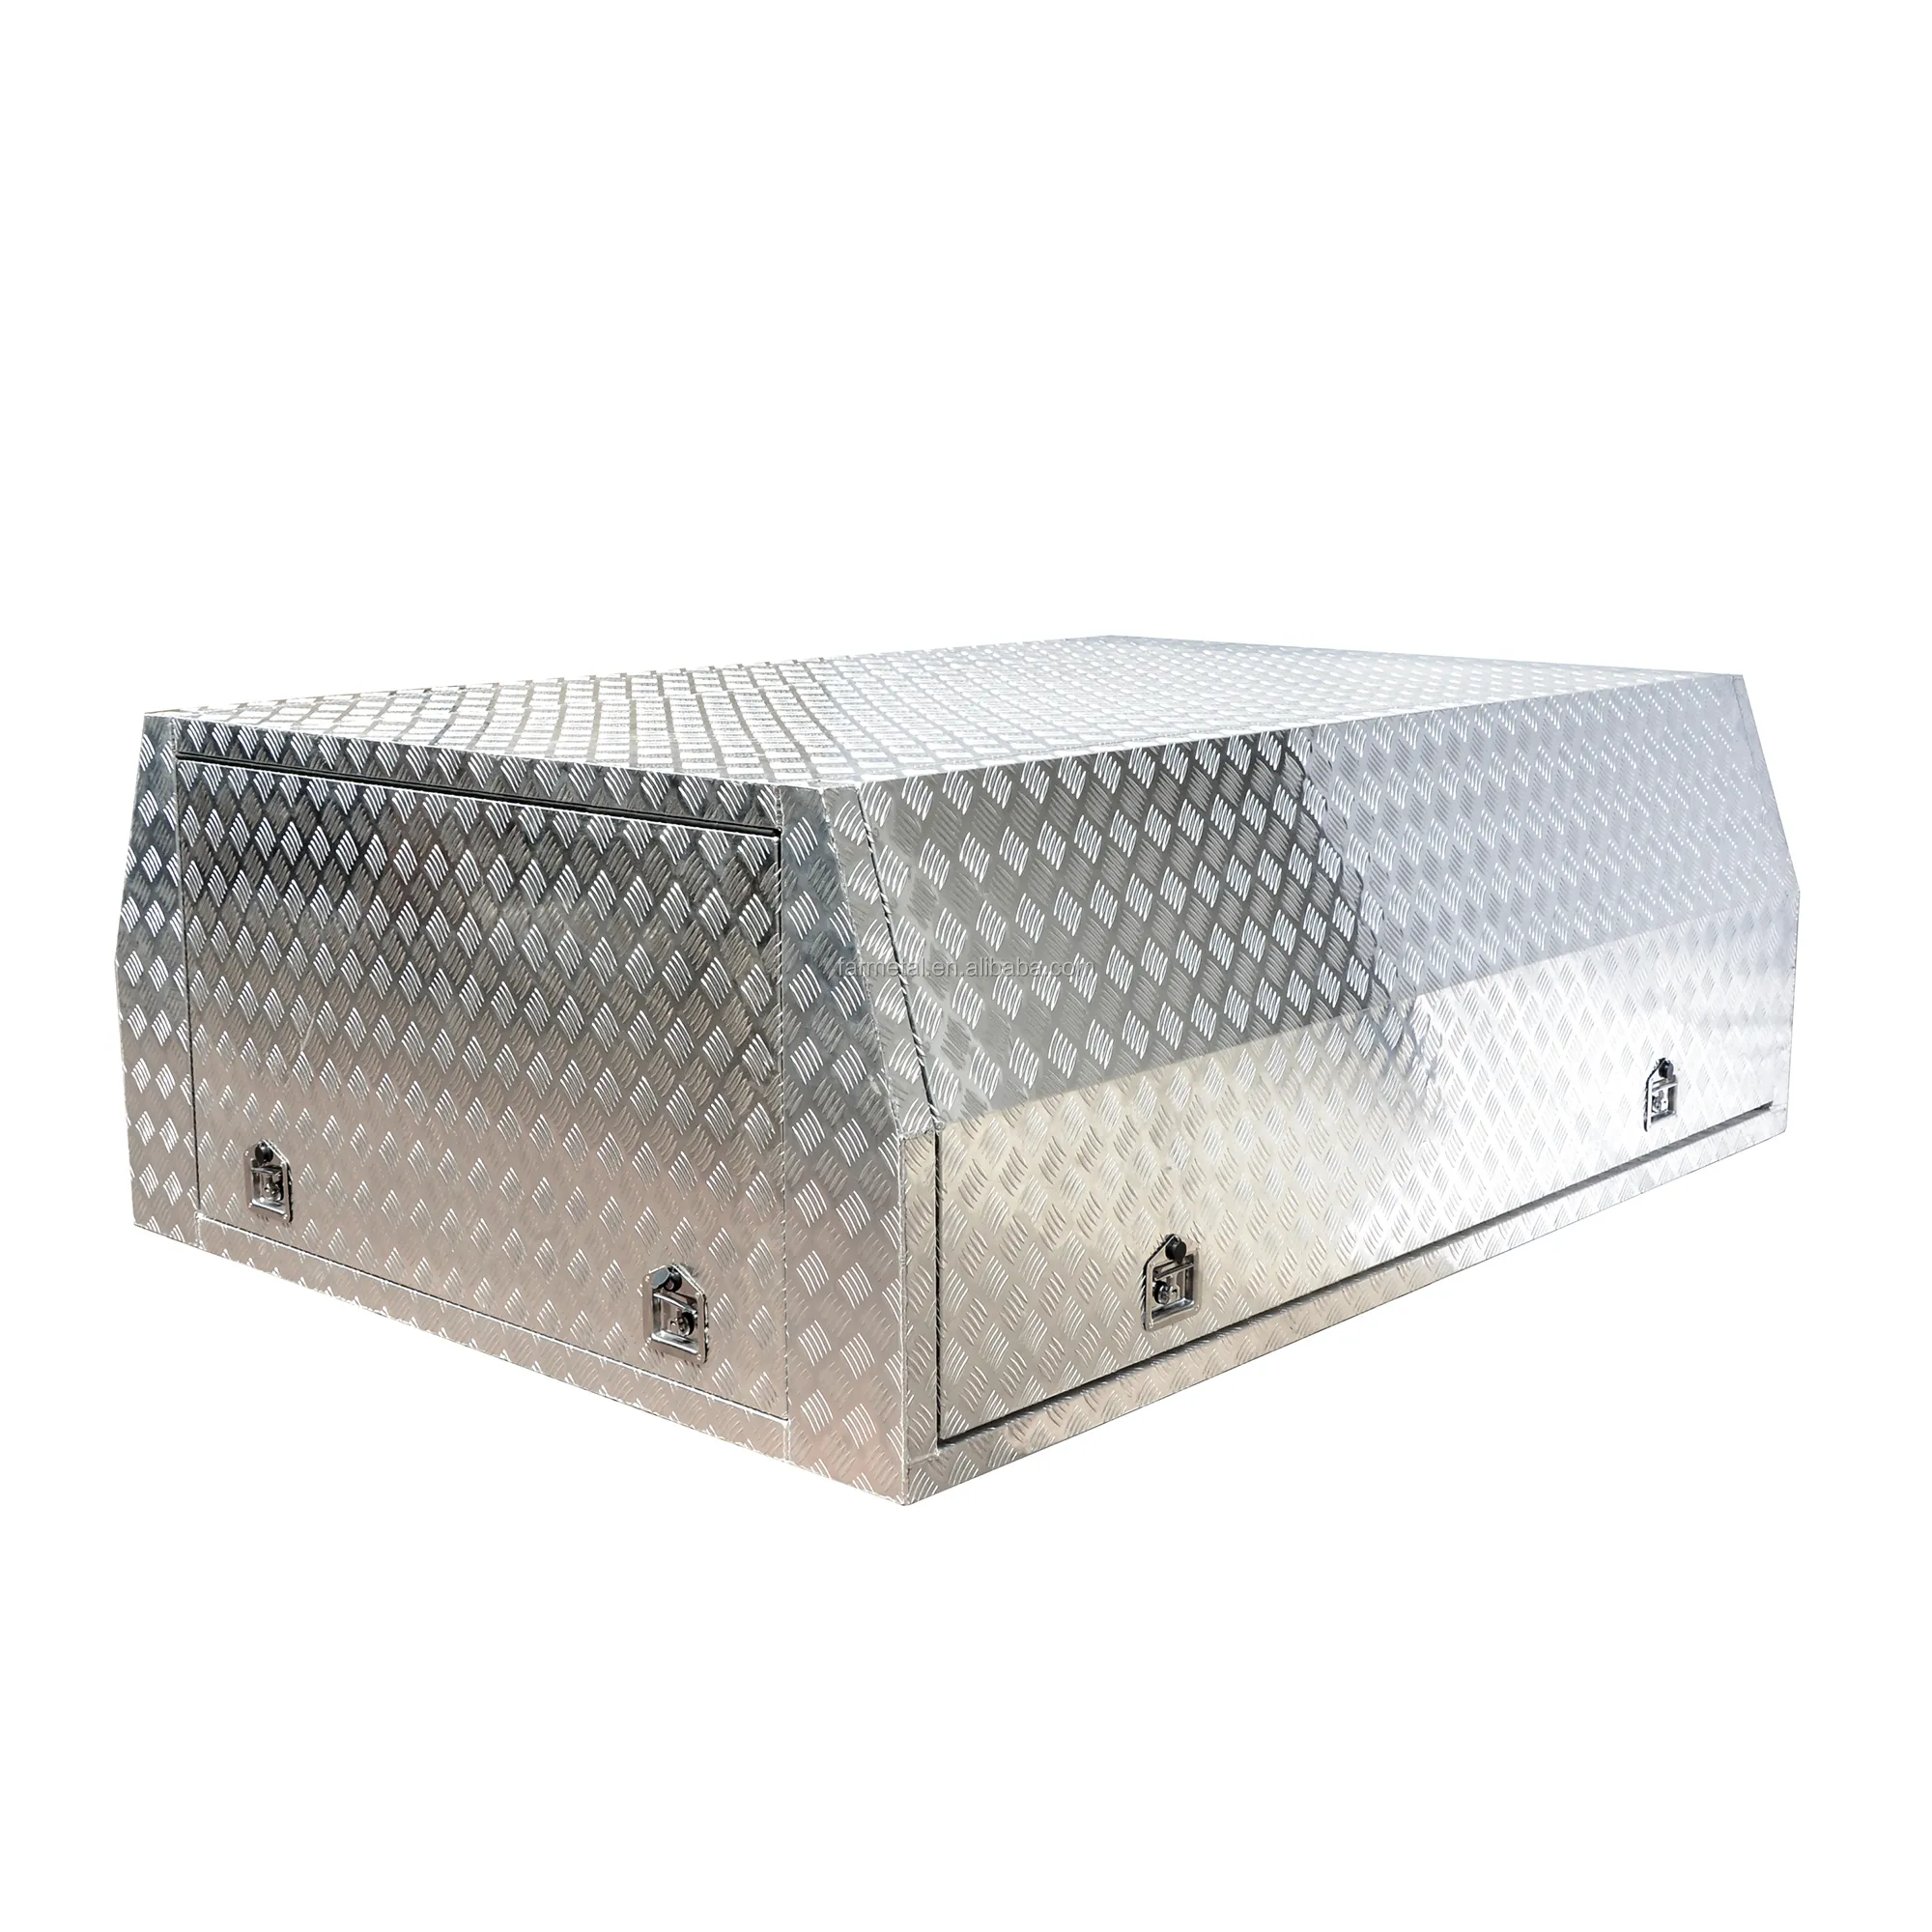 1780x1780x860mm Hot Selling Heavy Duty Waterproof Aluminium UTE Canopies storage case kit underbody truck boxs trailers cabinet